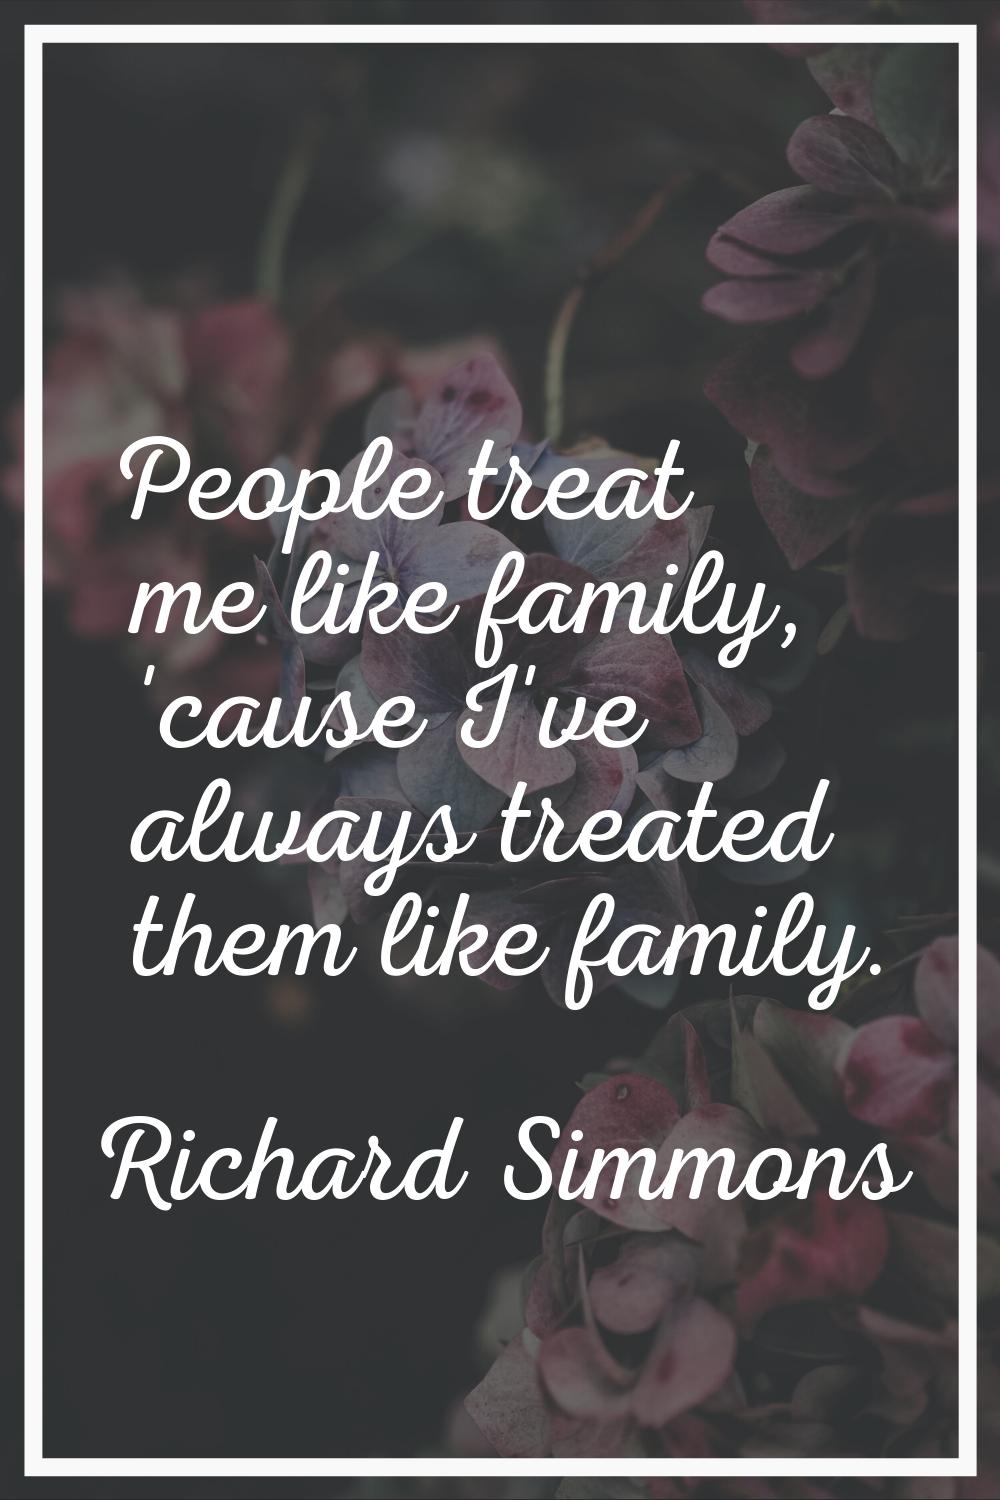 People treat me like family, 'cause I've always treated them like family.